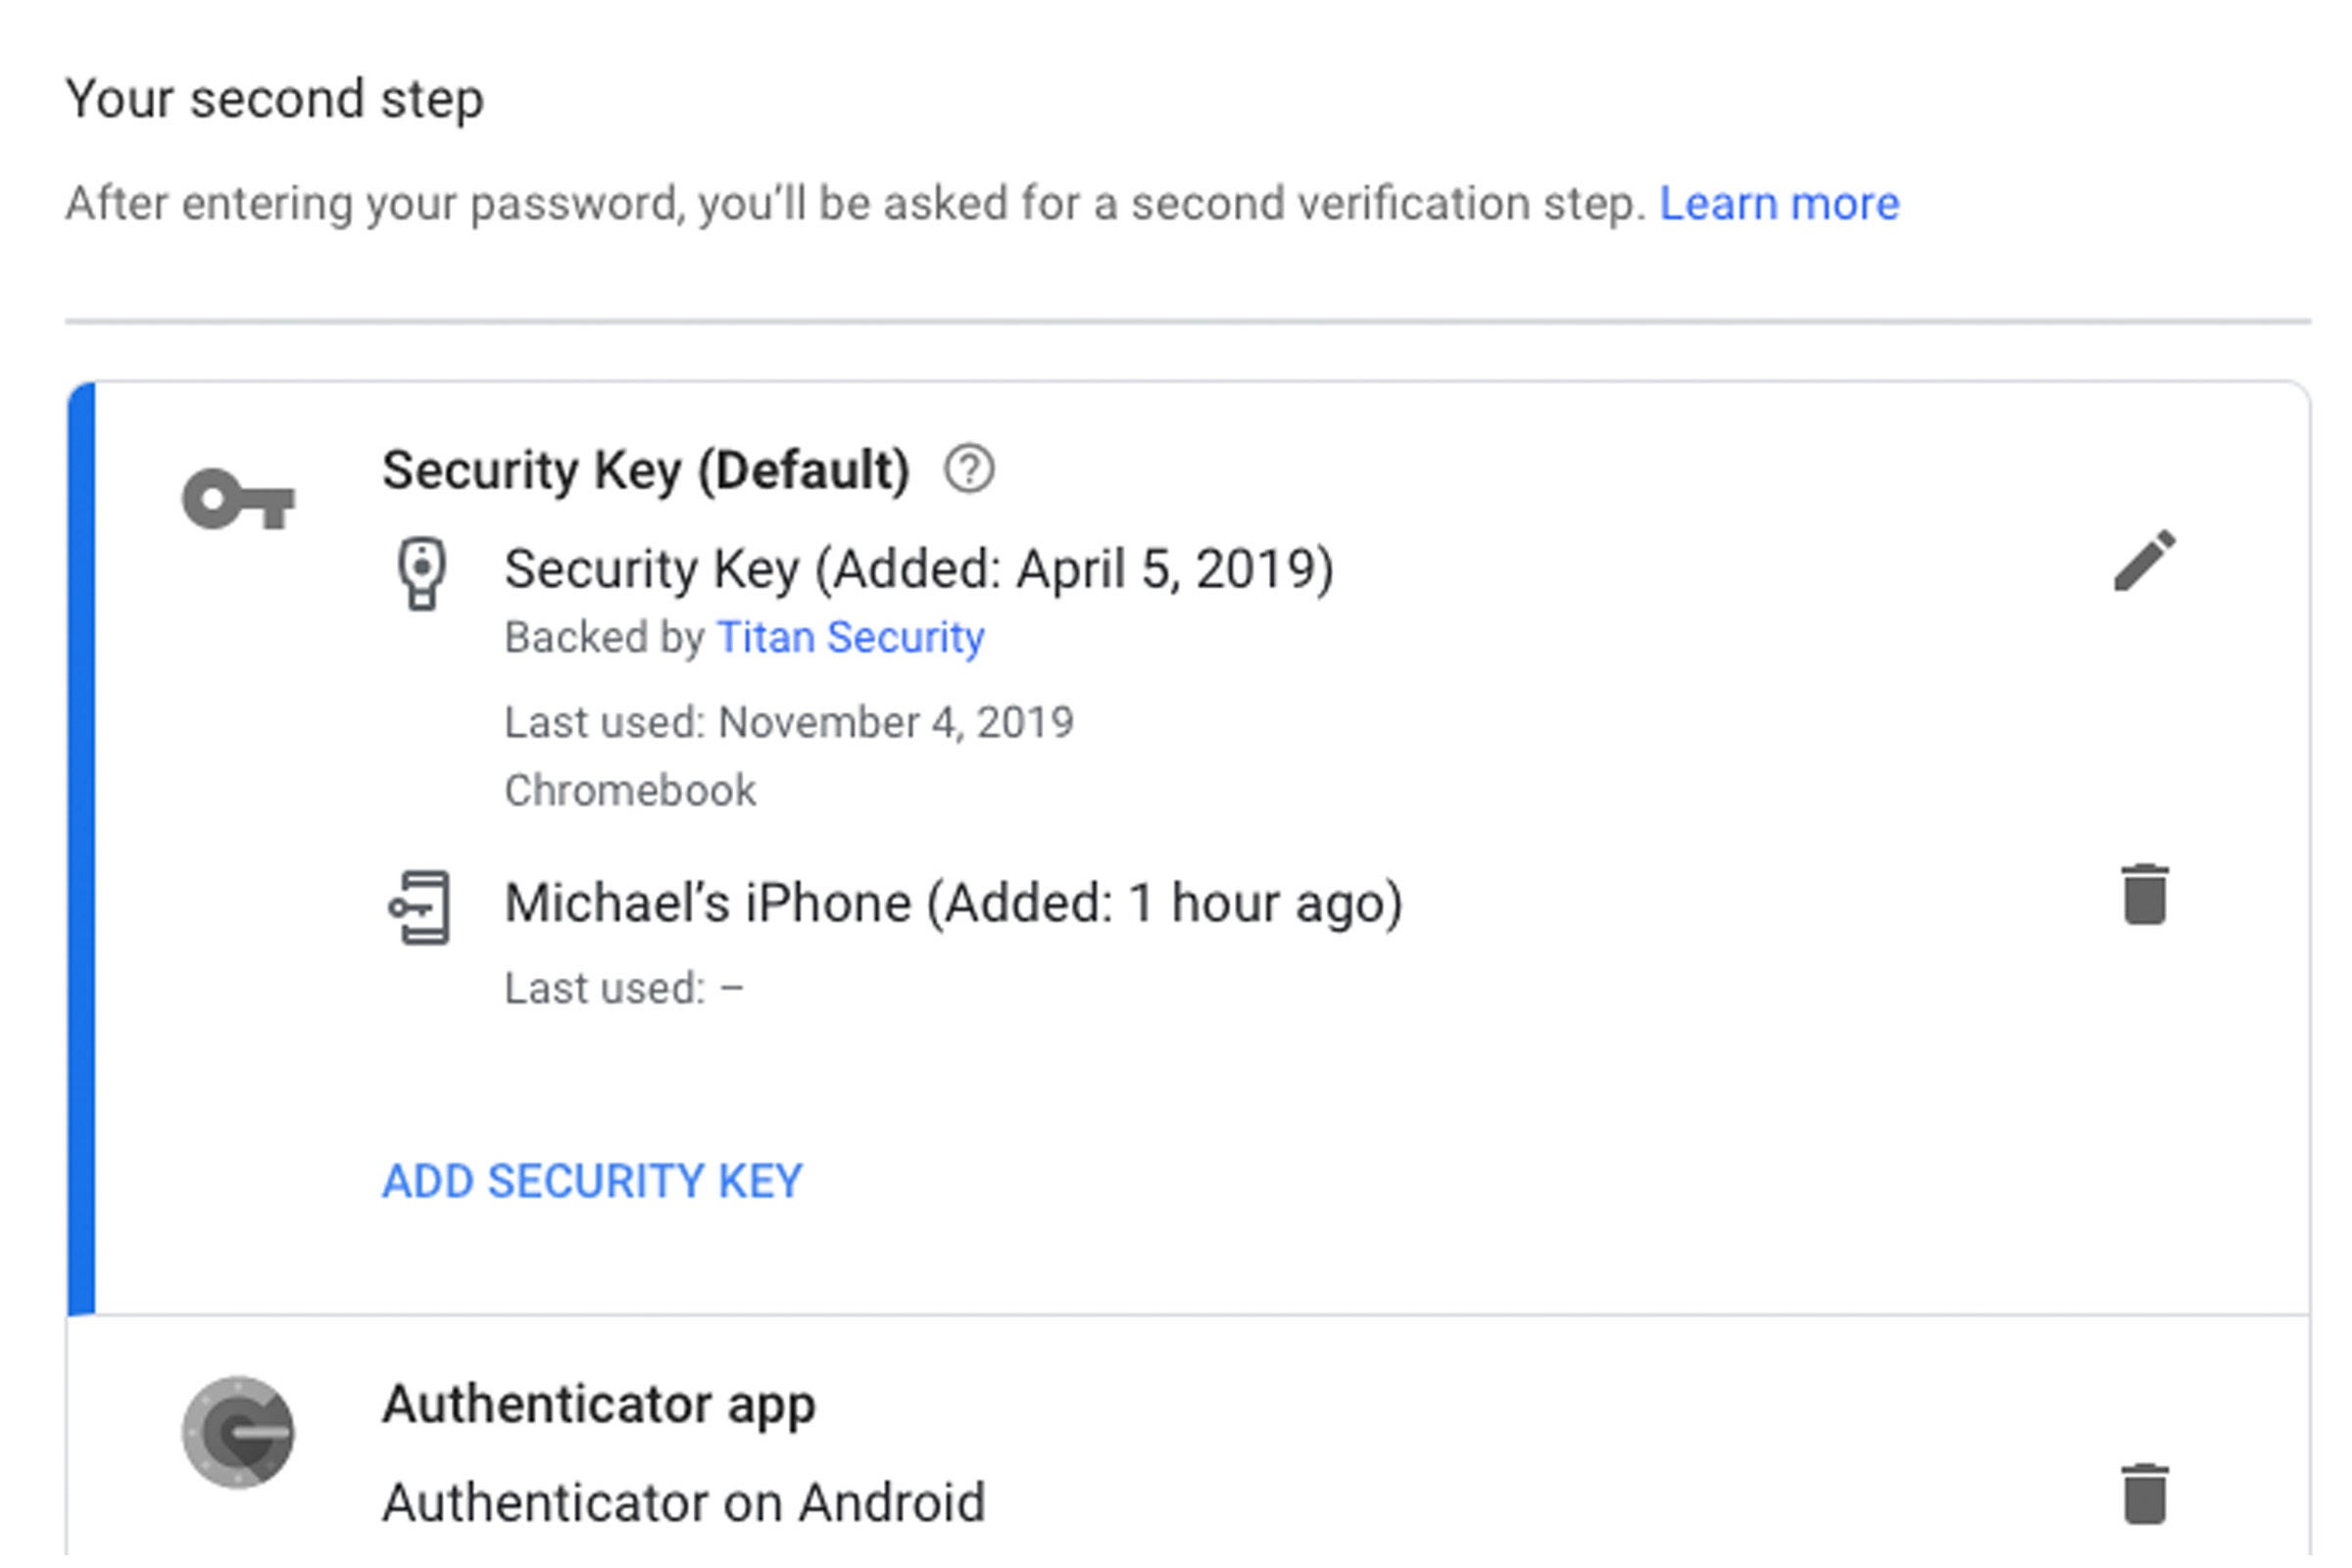 google security key